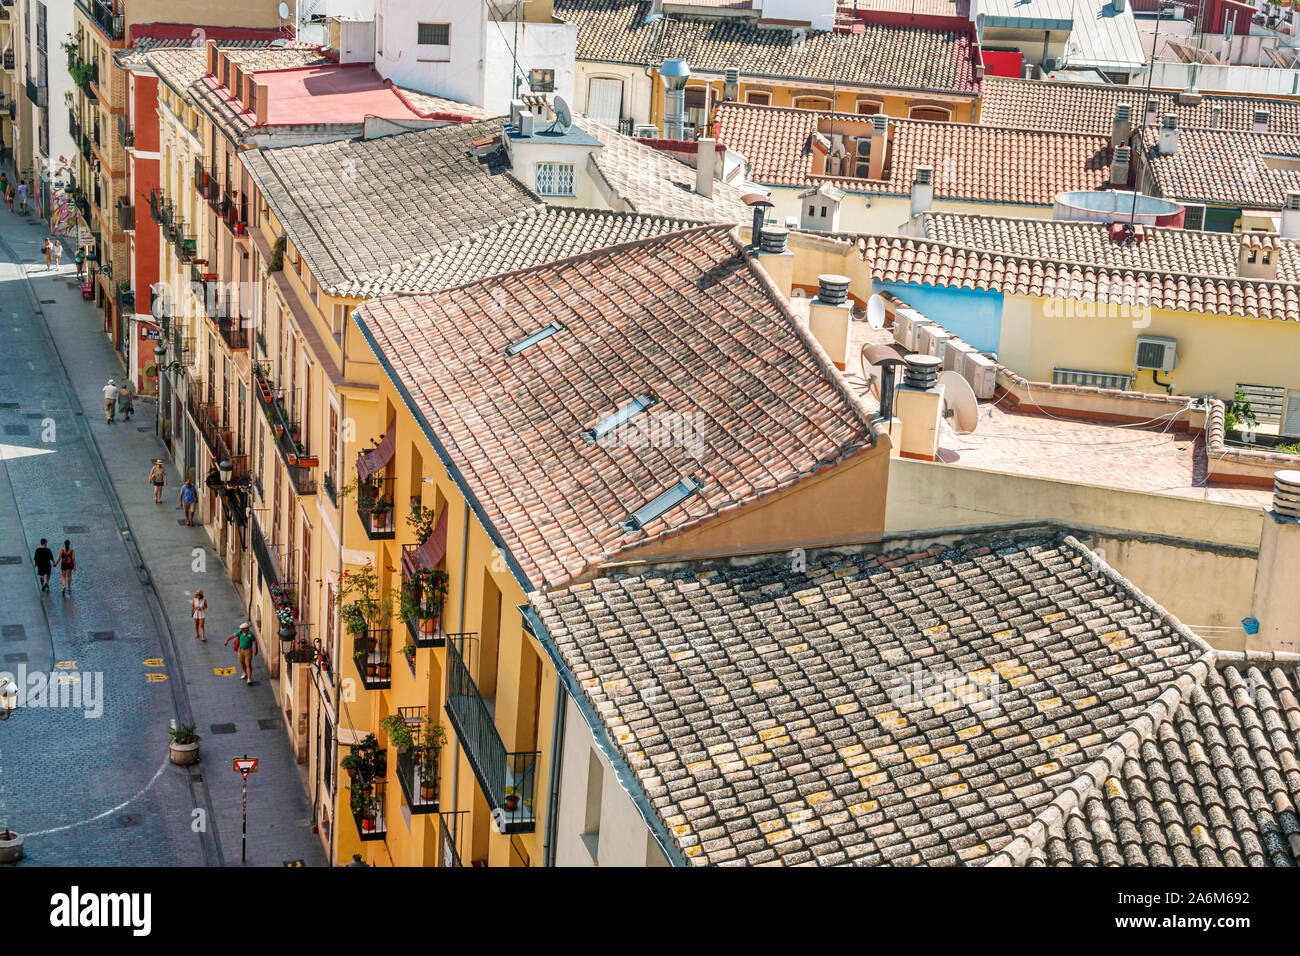 Valencia Spain,Ciutat Vella,old city,historic district,Carrer de Quart,street,rooftops,terracotta barrel tile roofs,residential apartment buildings,Sp Stock Photo